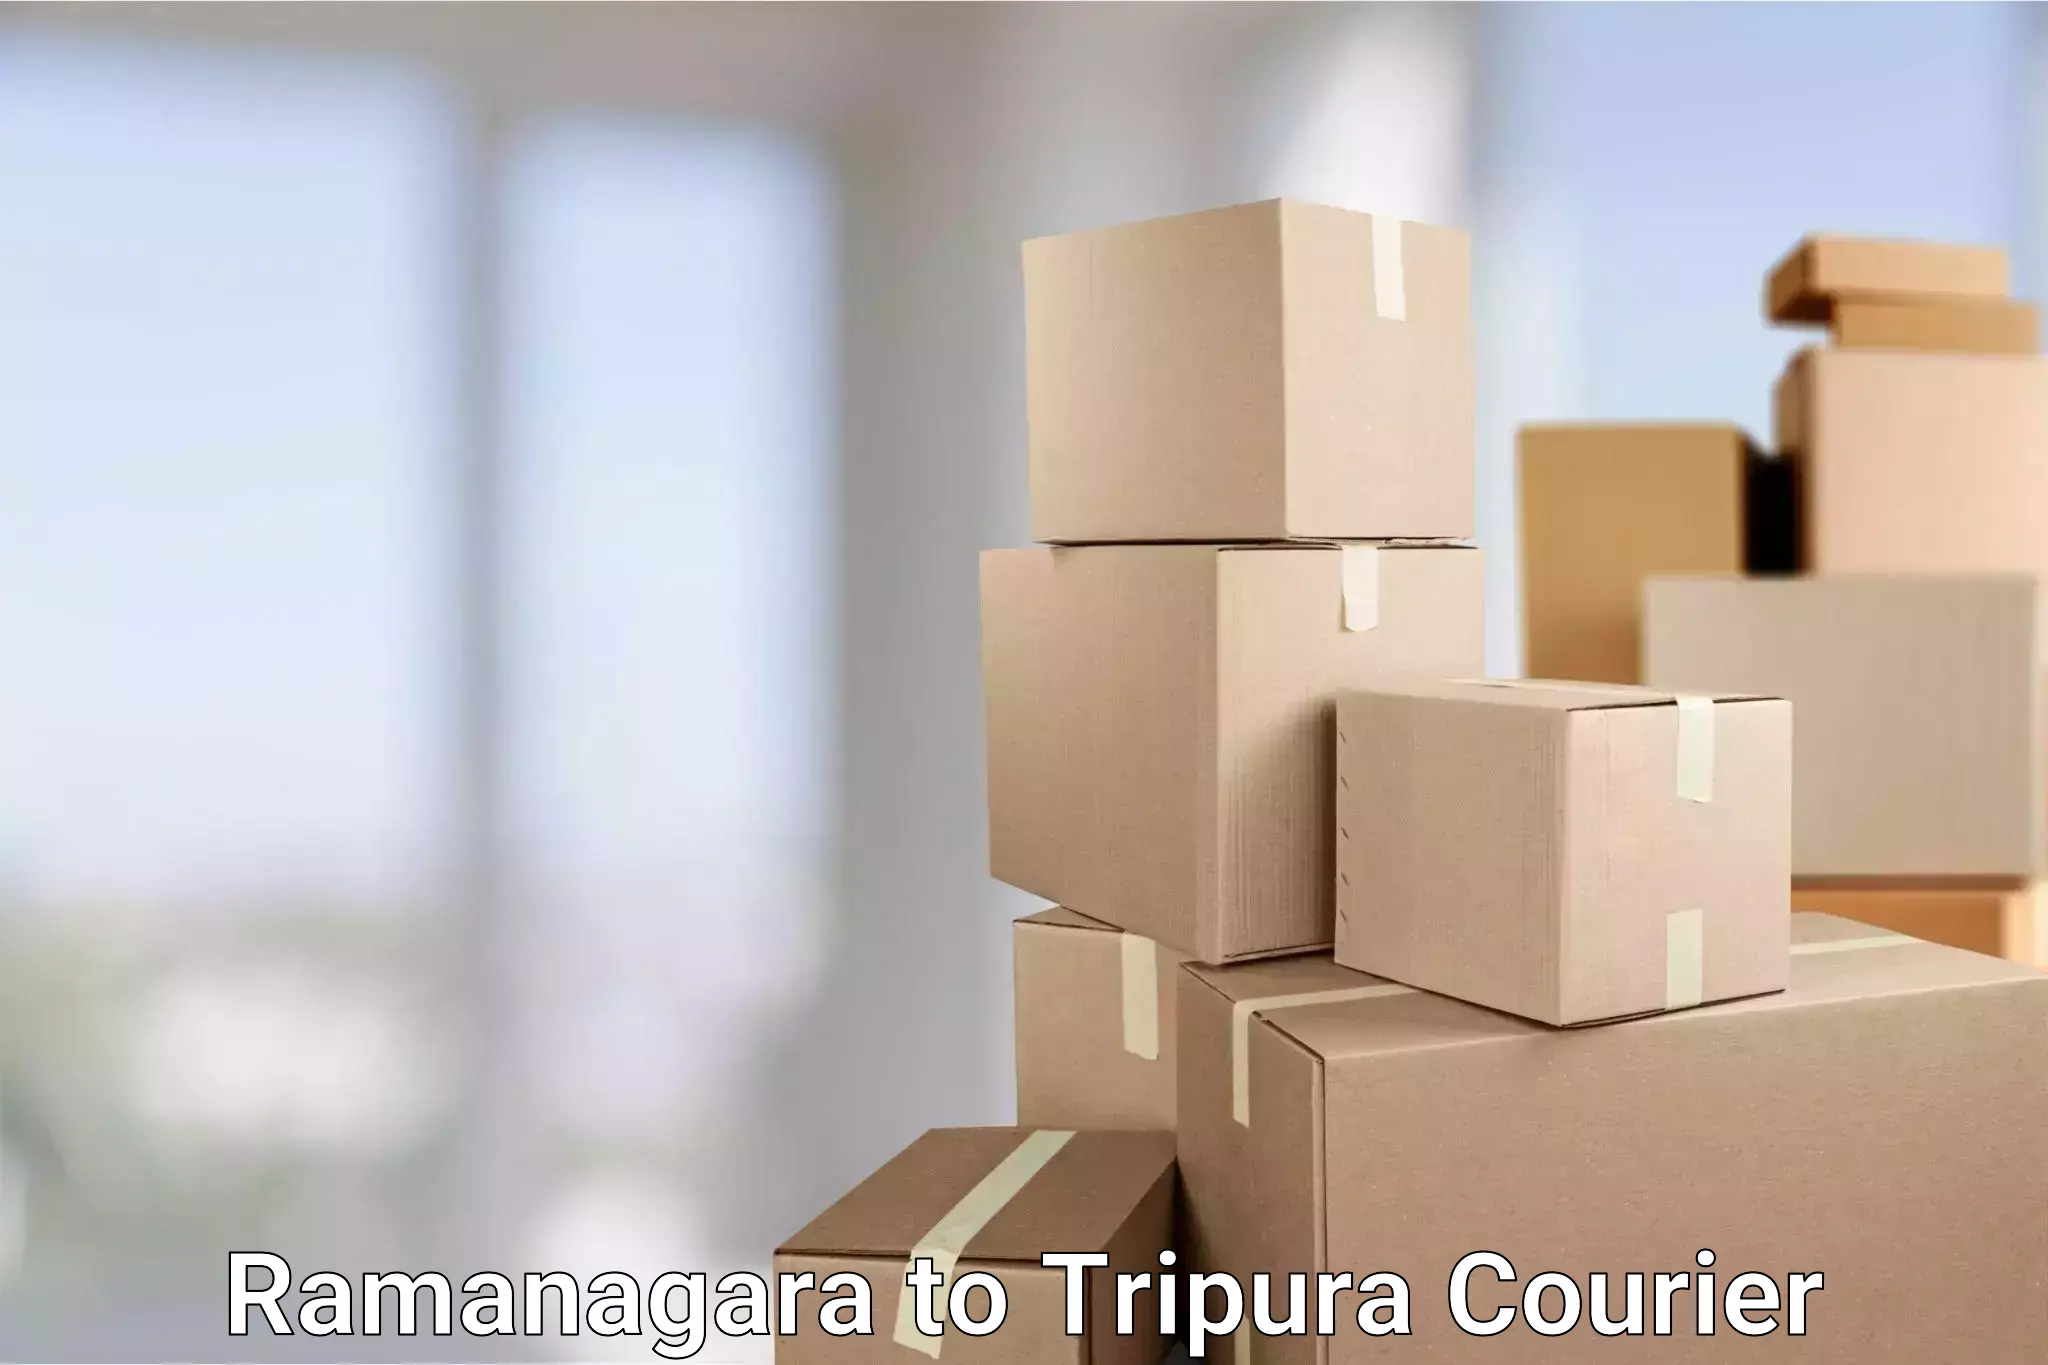 Comprehensive shipping network Ramanagara to Udaipur Tripura